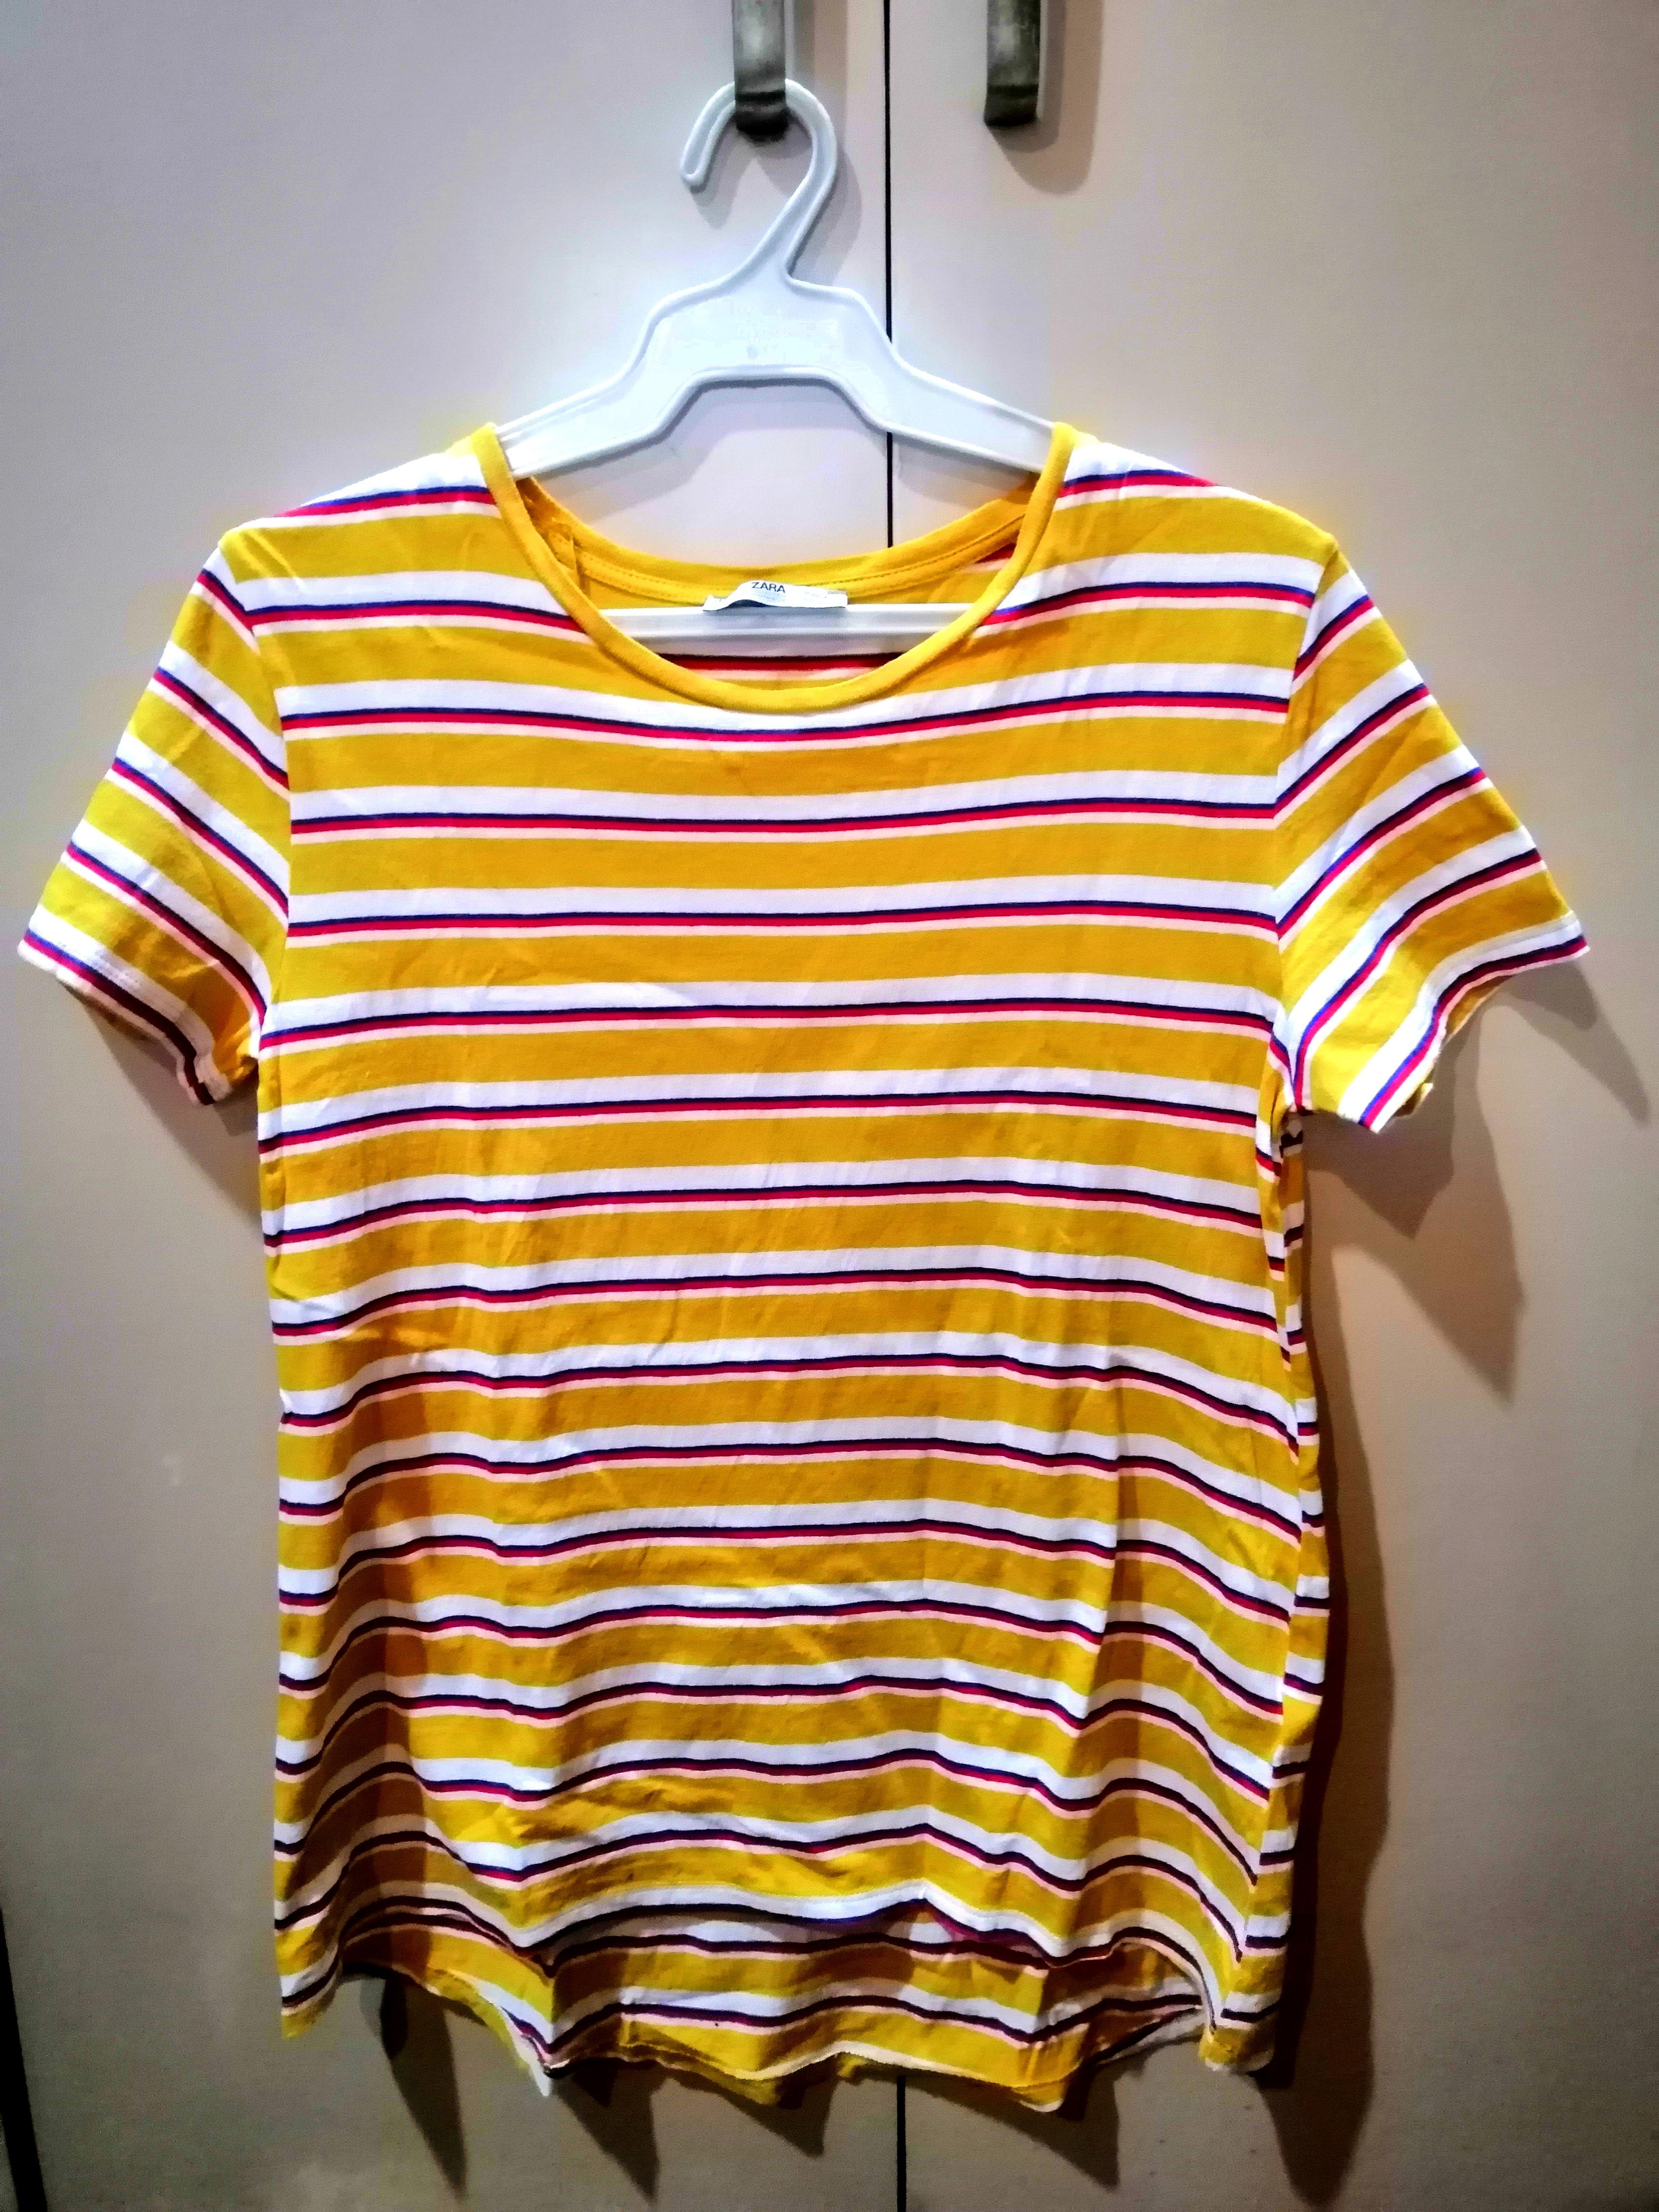 zara yellow striped shirt